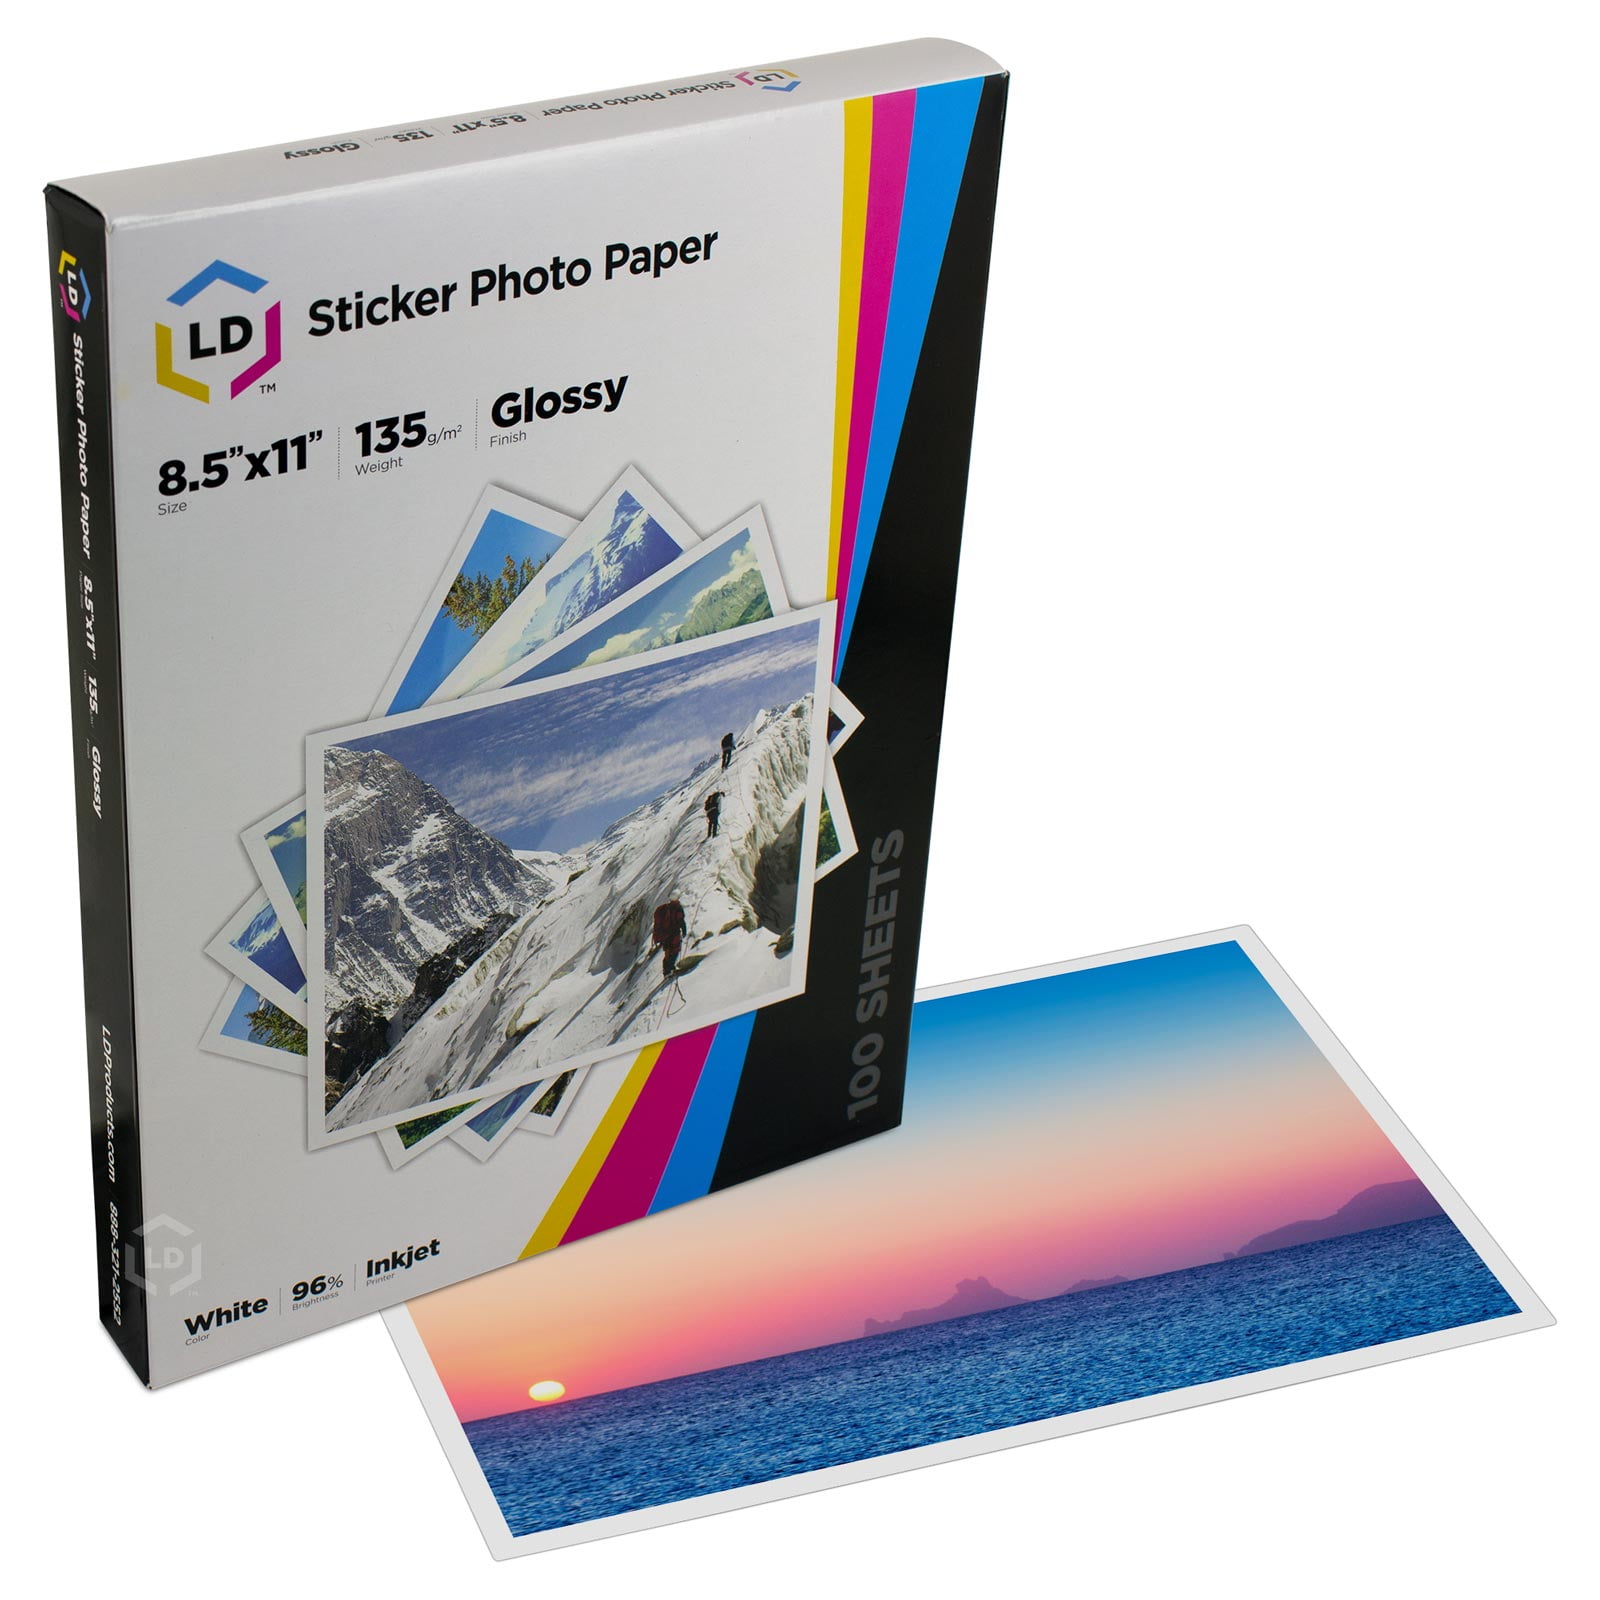 LD Glossy Photo Sticker Paper - 100 Sheets - 8.5